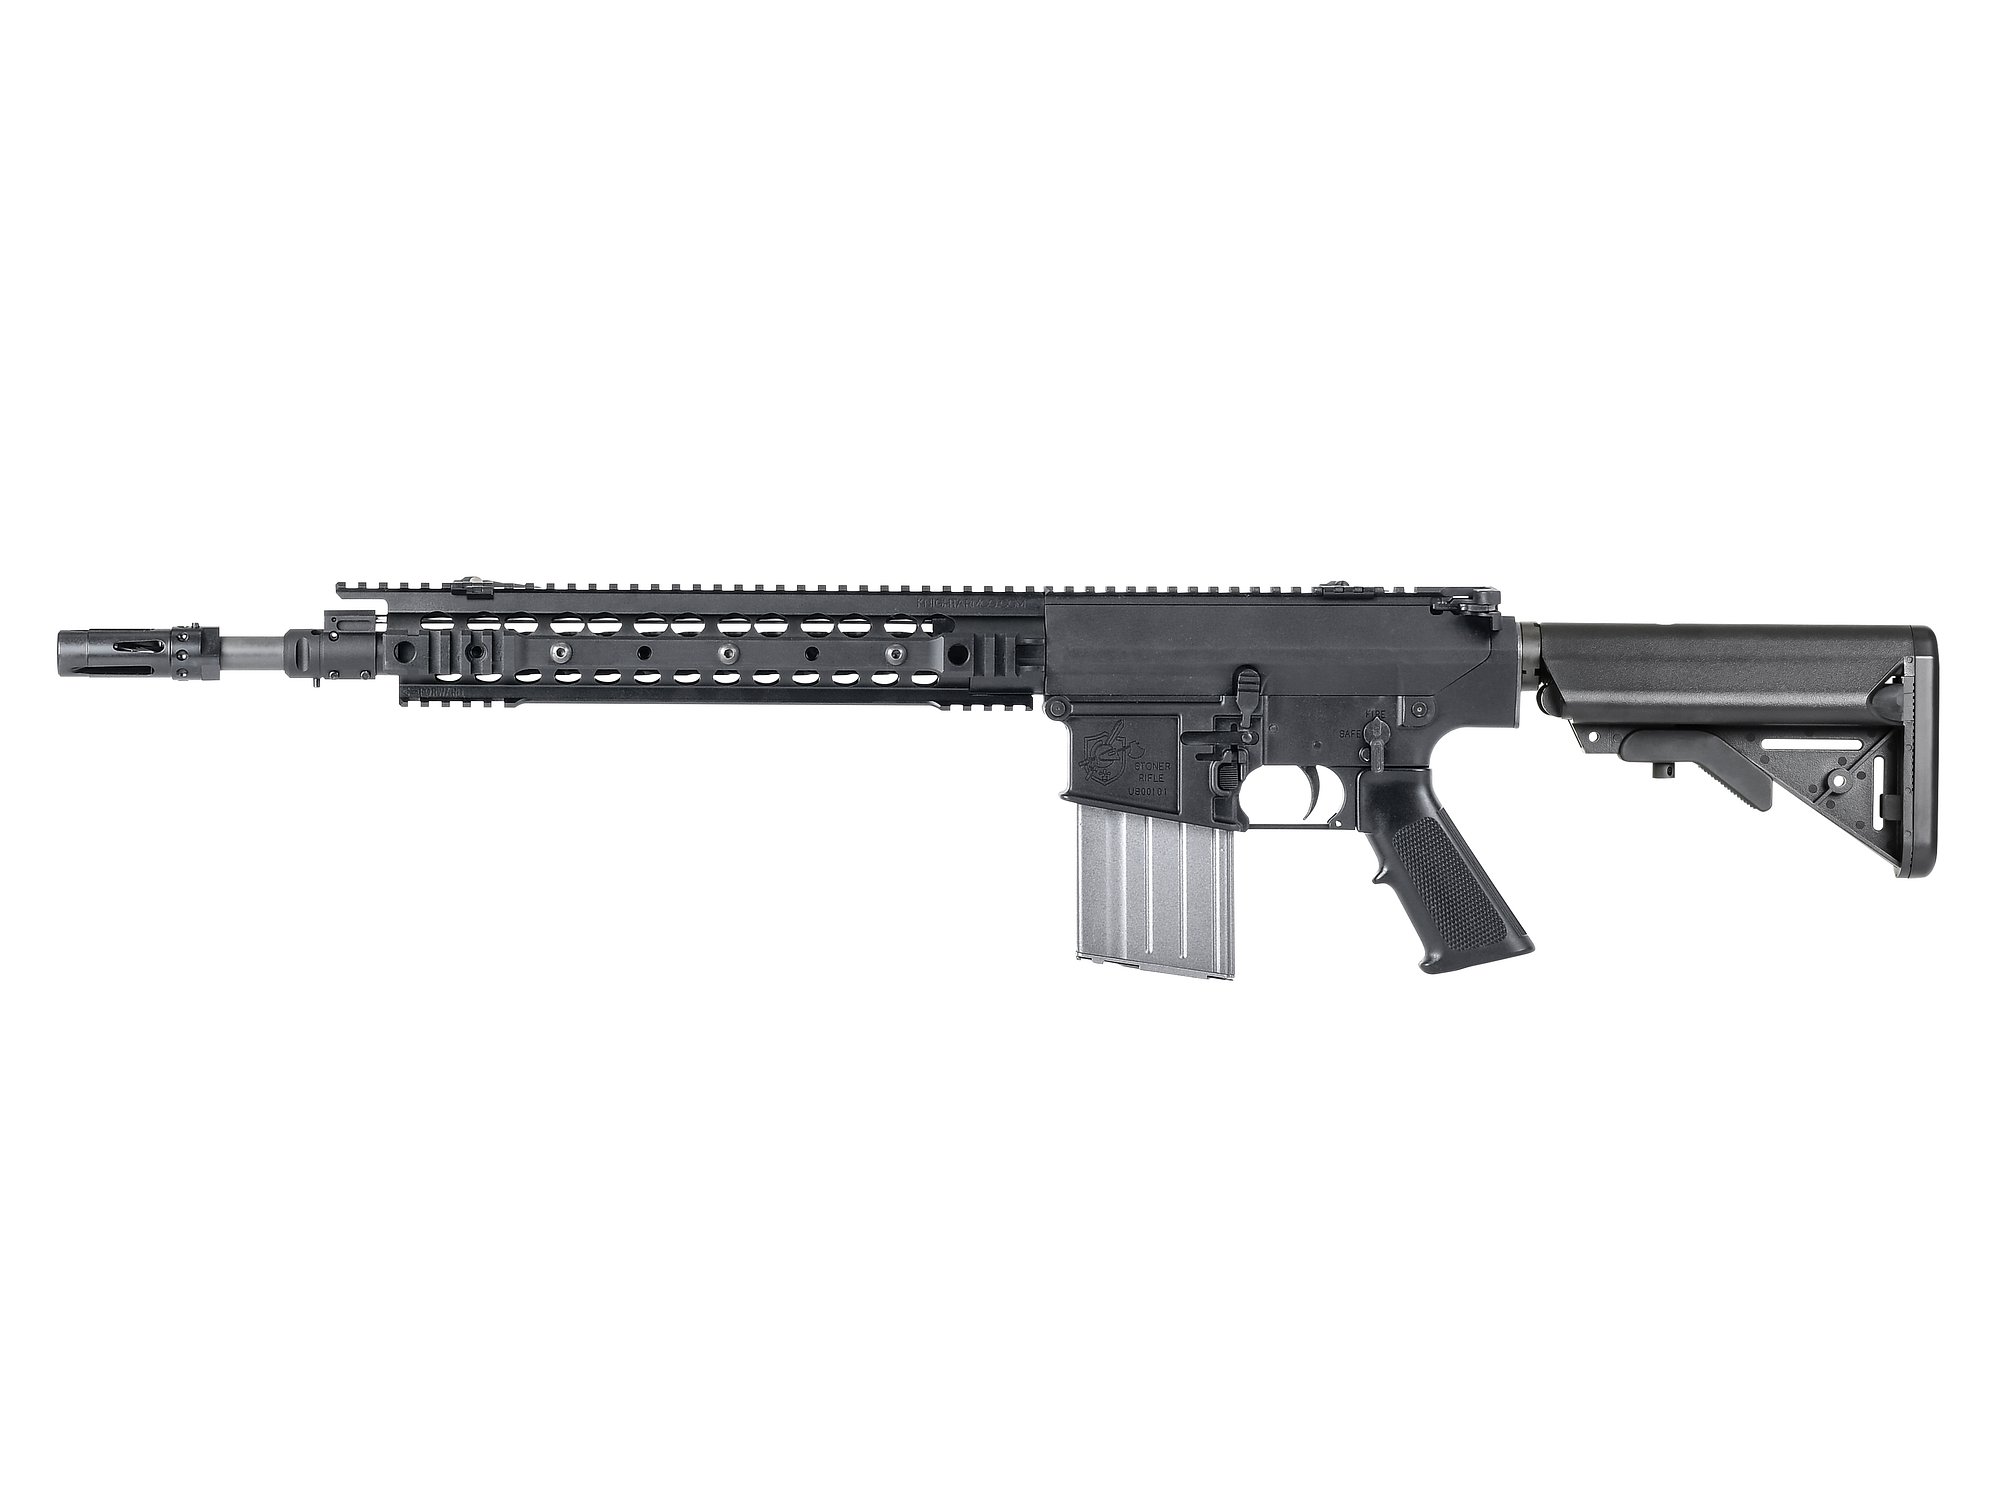 VFC KAC SR25 Enhanced Combat Carbine GBBR (JPver./Knight's Licensed)